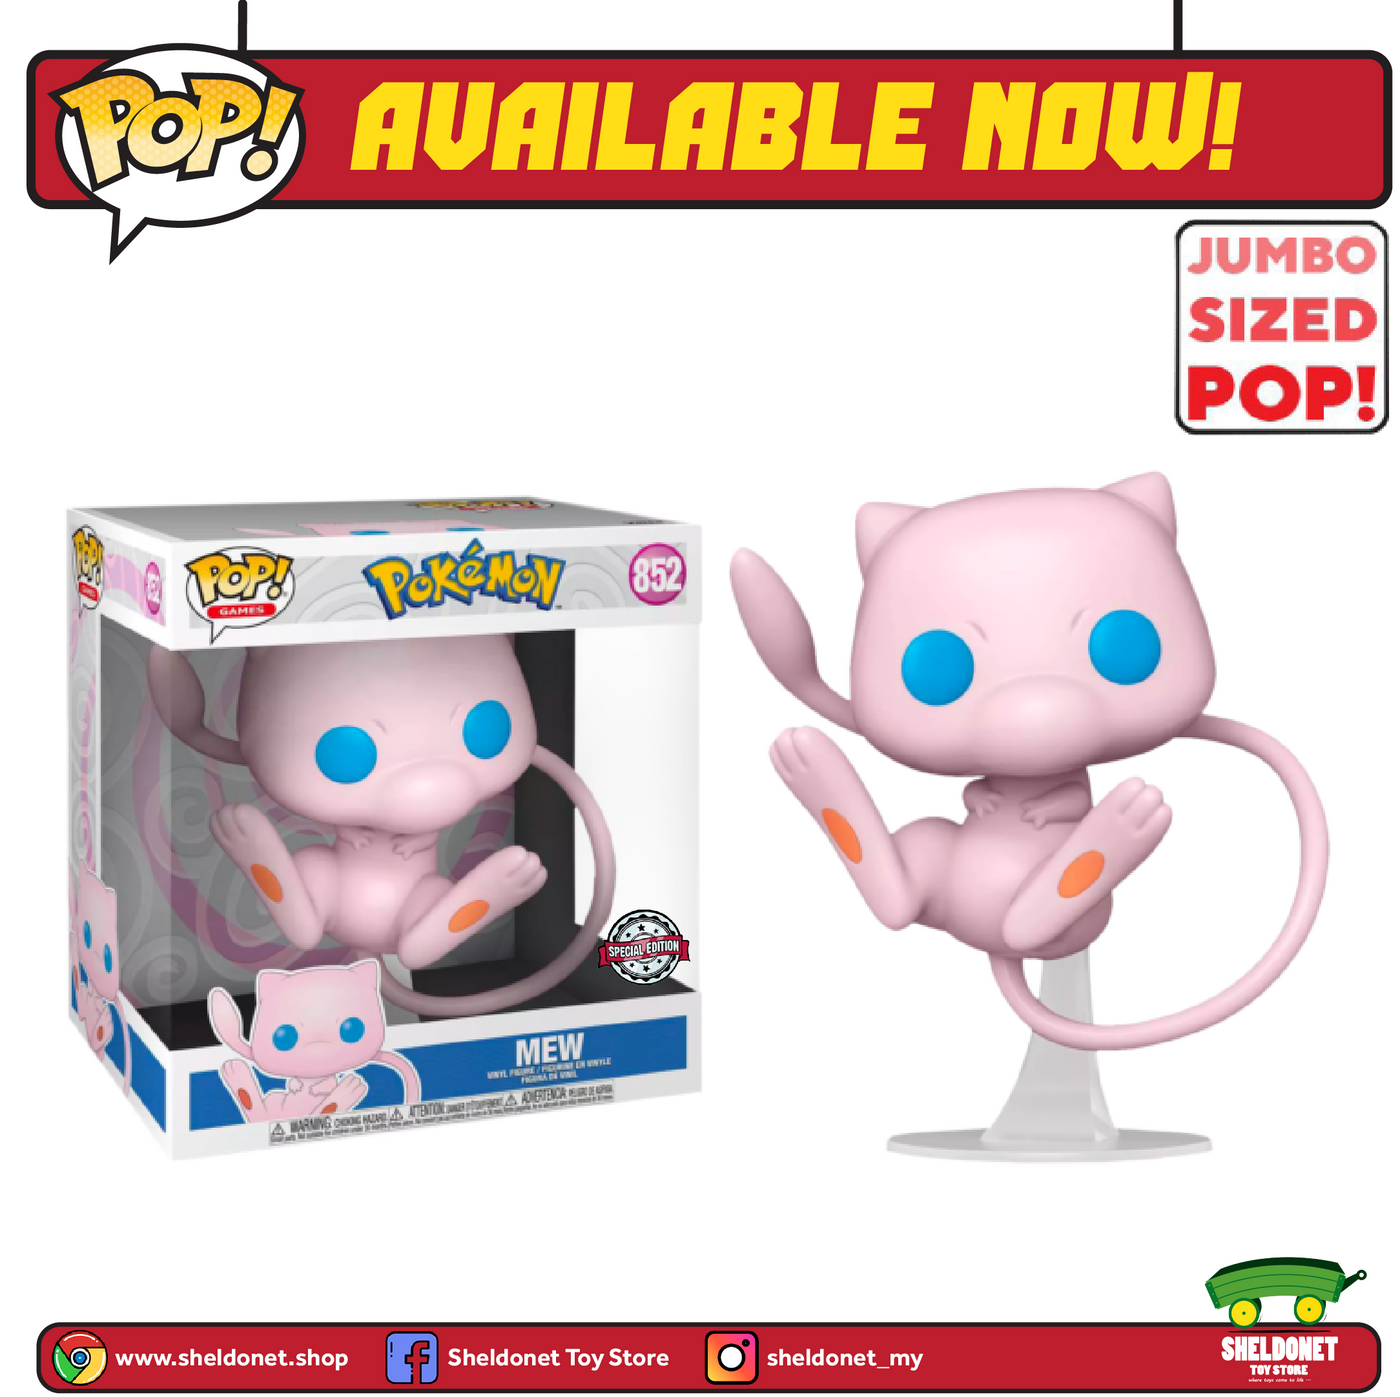 Mew (Jumbo Pop!) vinyl figurine no. 852, Pokémon Jumbo Pop!